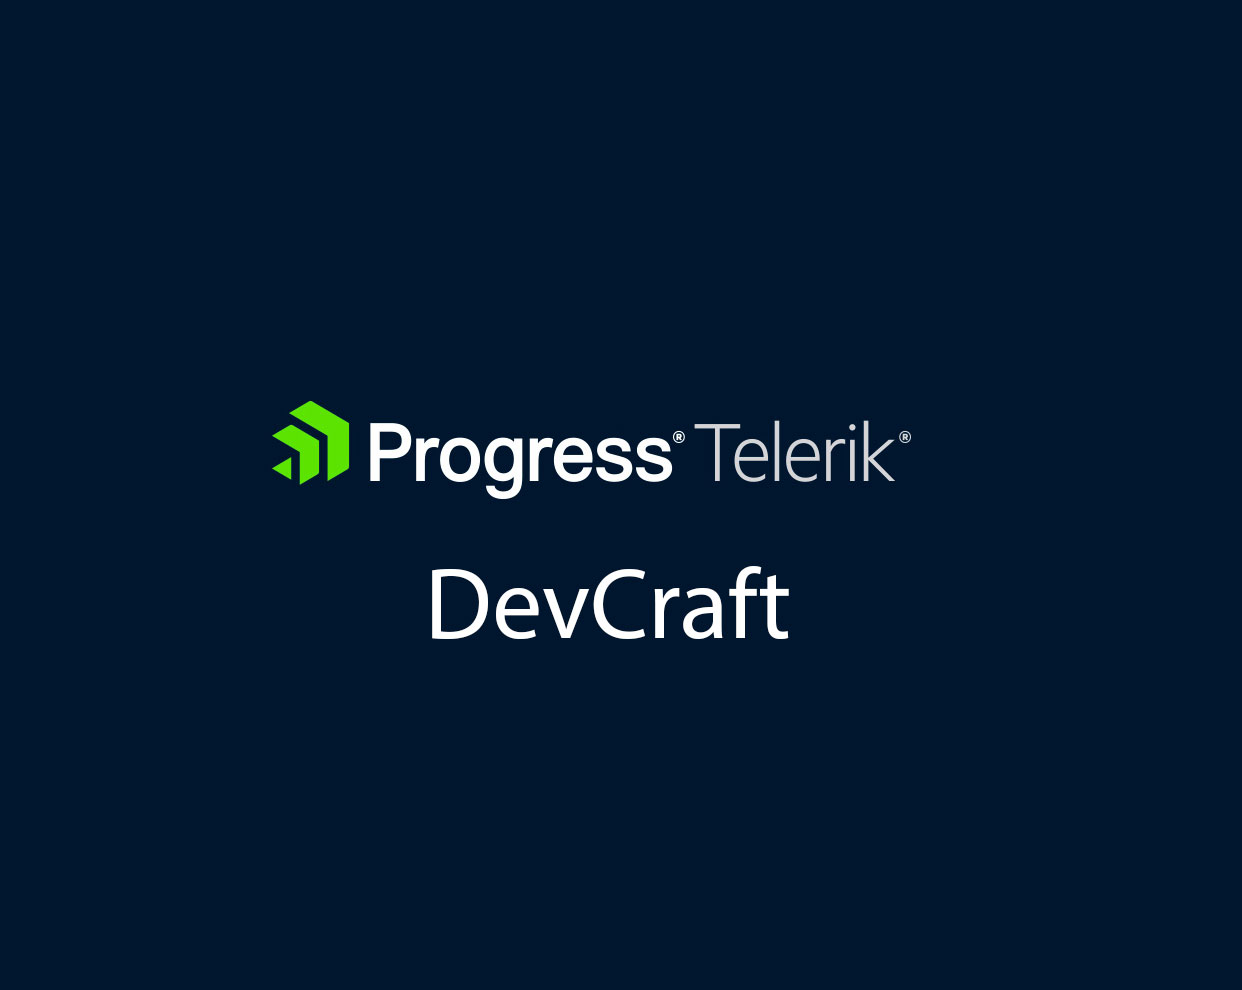 Progress DevCraft Ultimate